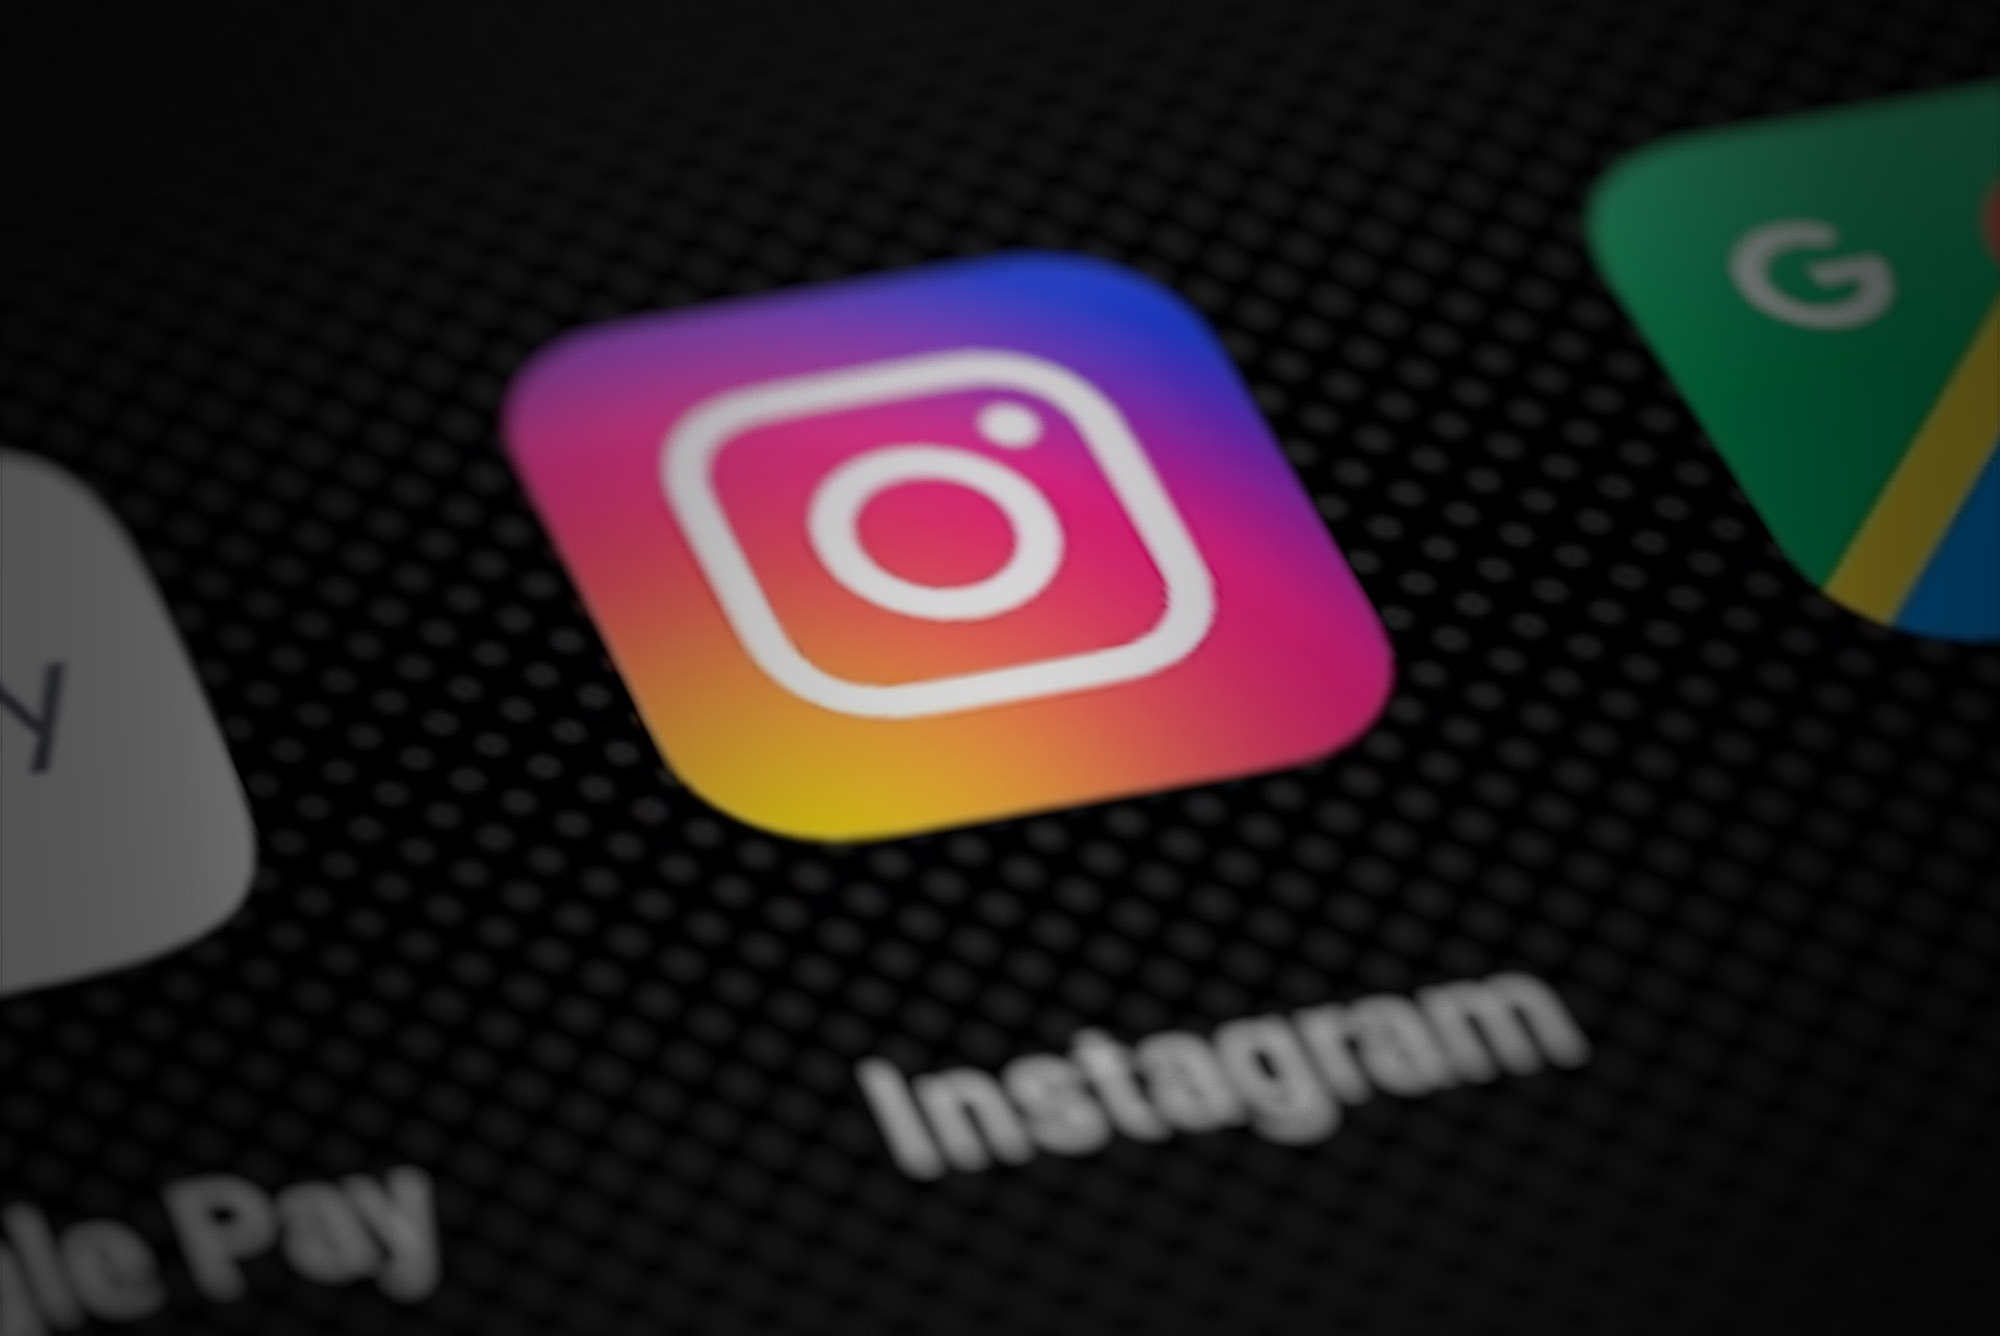 Instagram logo on smartphone screen.